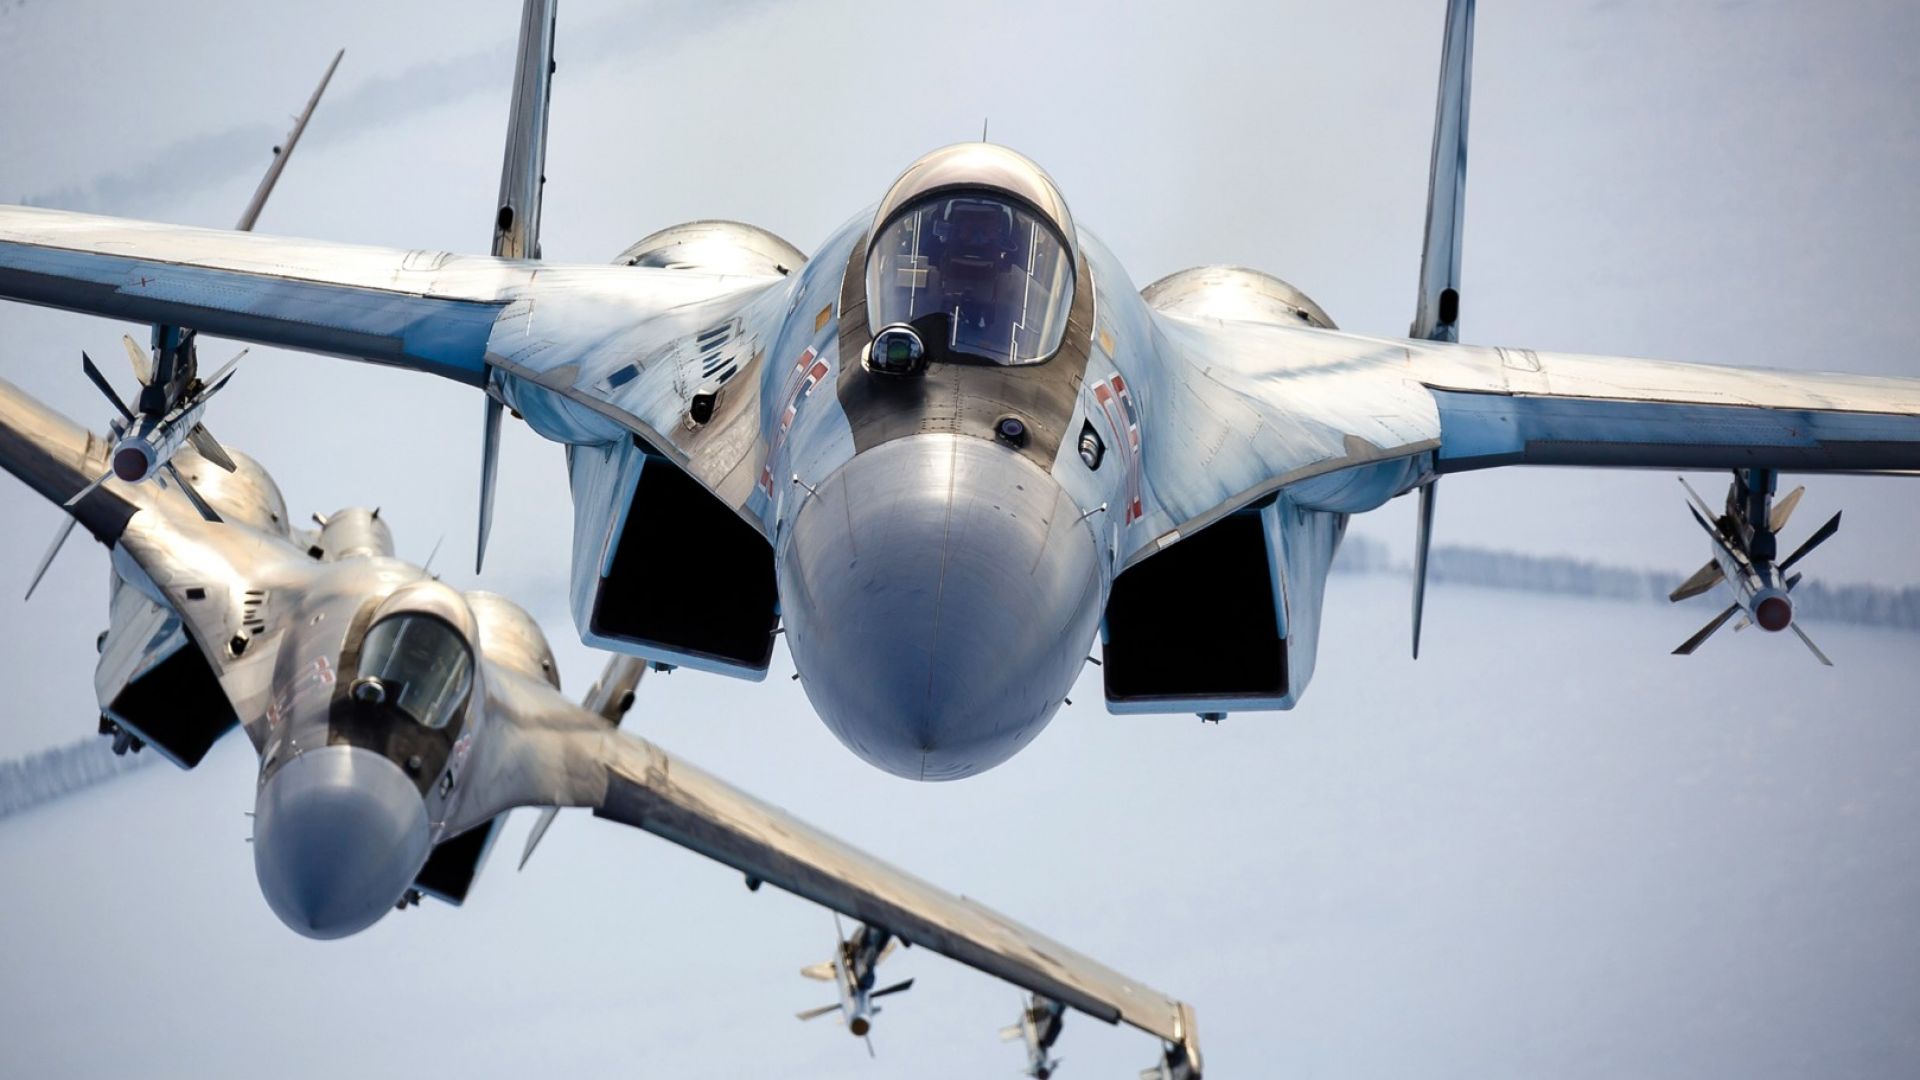 Русия провежда тактически военновъздушни учения над Балтийско море